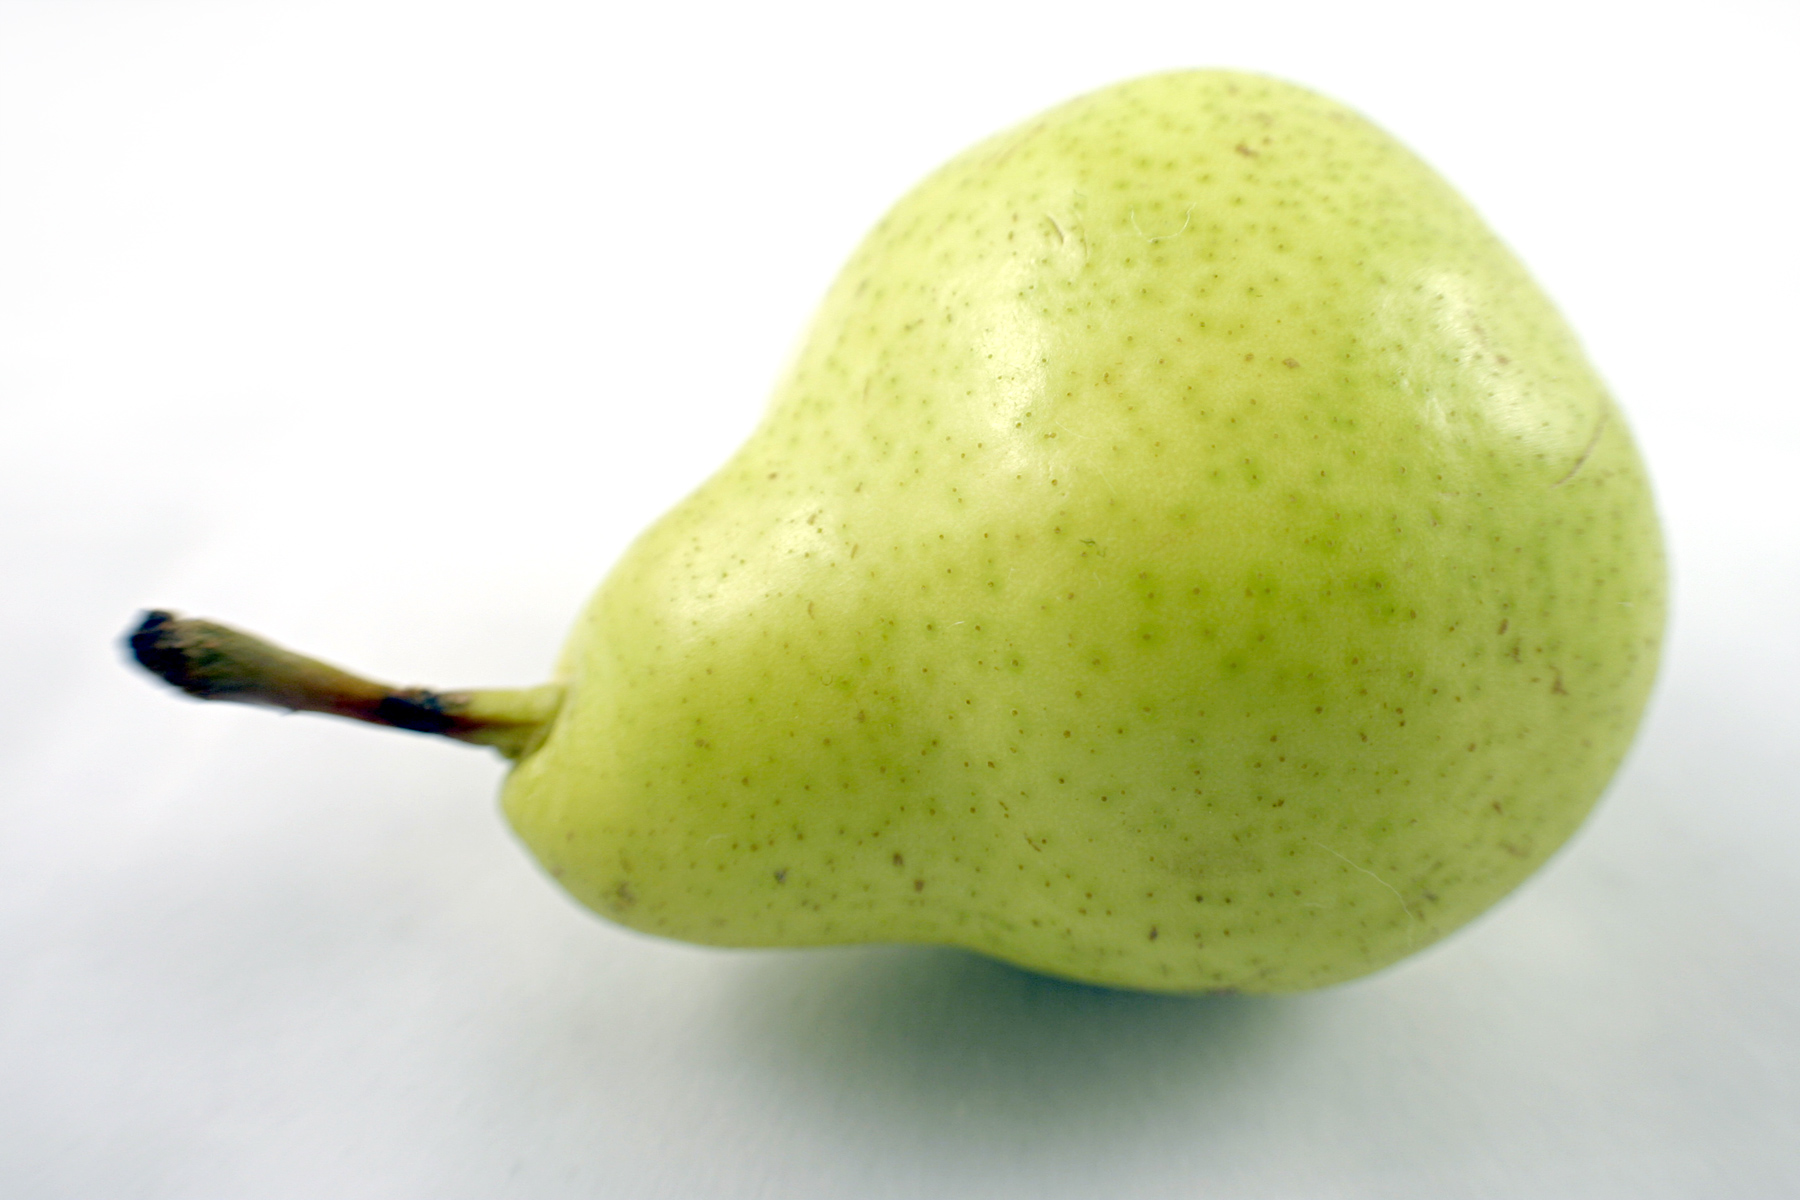 Pear like. Груша Ларинская. Зеленая груша. Груша лежит. Груша на белом фоне.